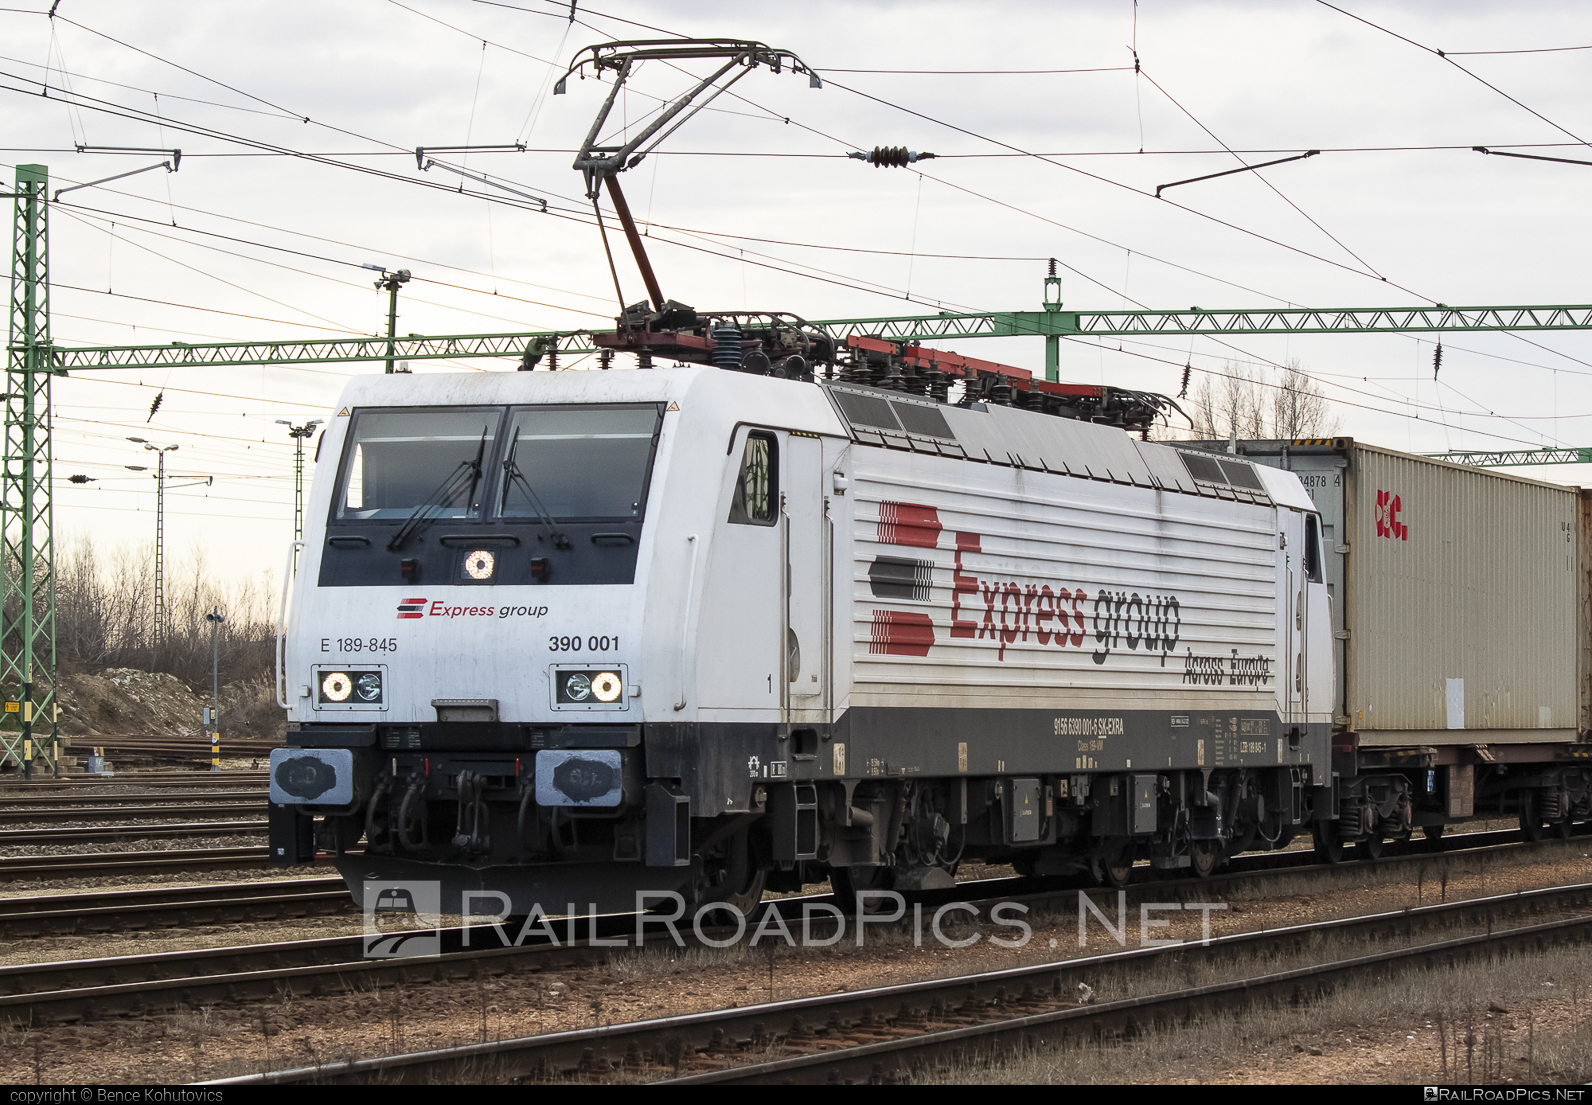 Siemens ES 64 F4 - 390 001 operated by METRANS Rail s.r.o. #ExpressWagons #ExpressWagonsAS #es64 #es64f4 #eurosprinter #expressgroup #exra #hhla #metrans #metransrail #siemens #siemenses64 #siemenses64f4